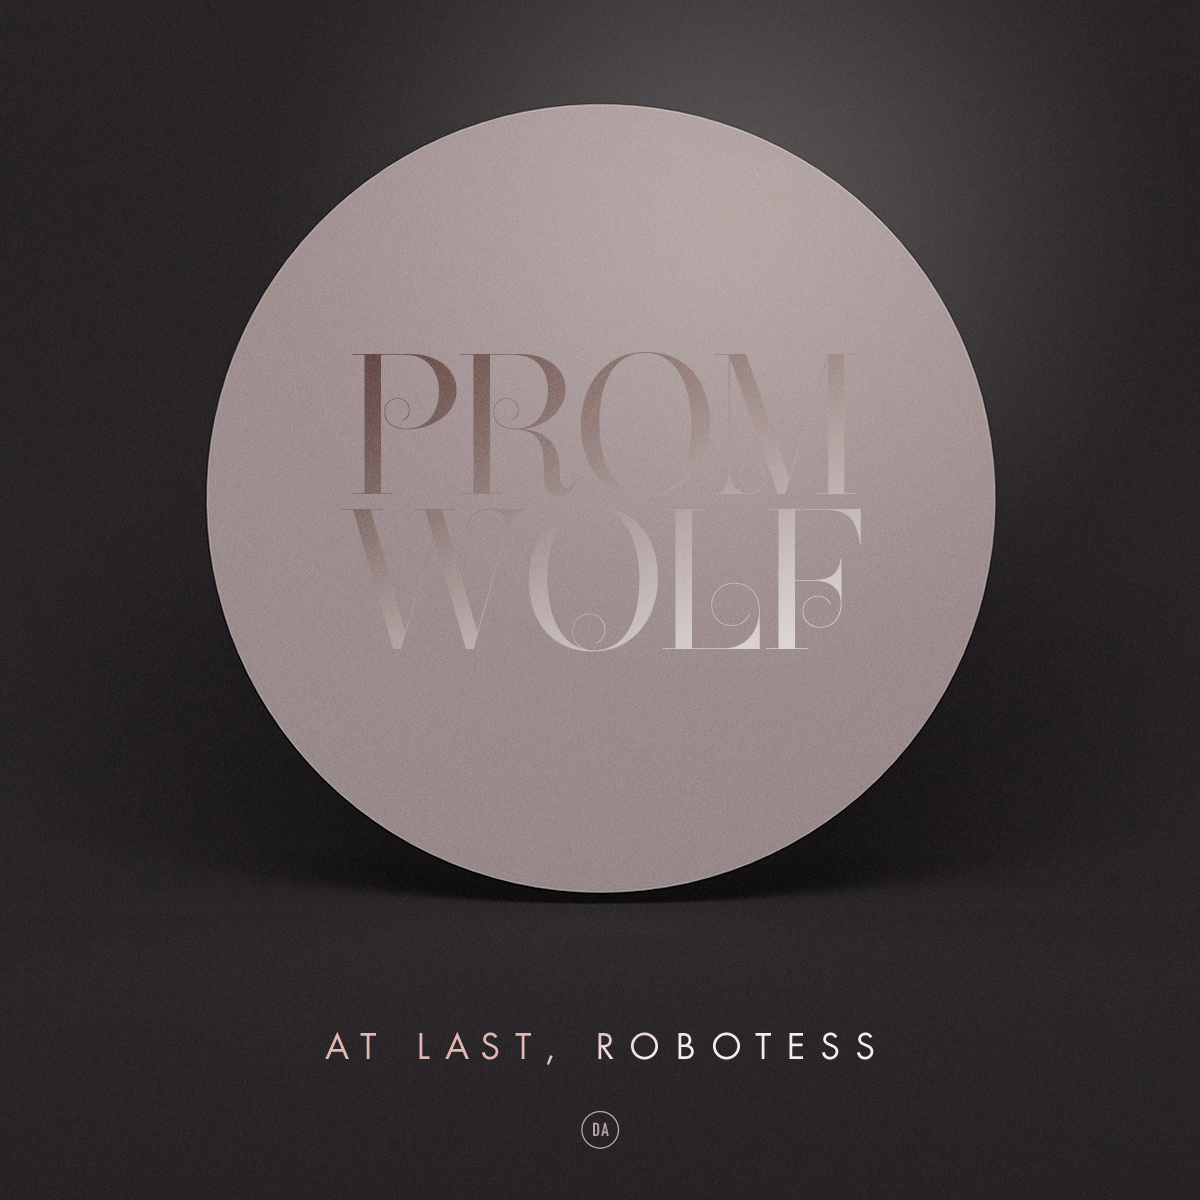 Promwolf — At last, Robotess